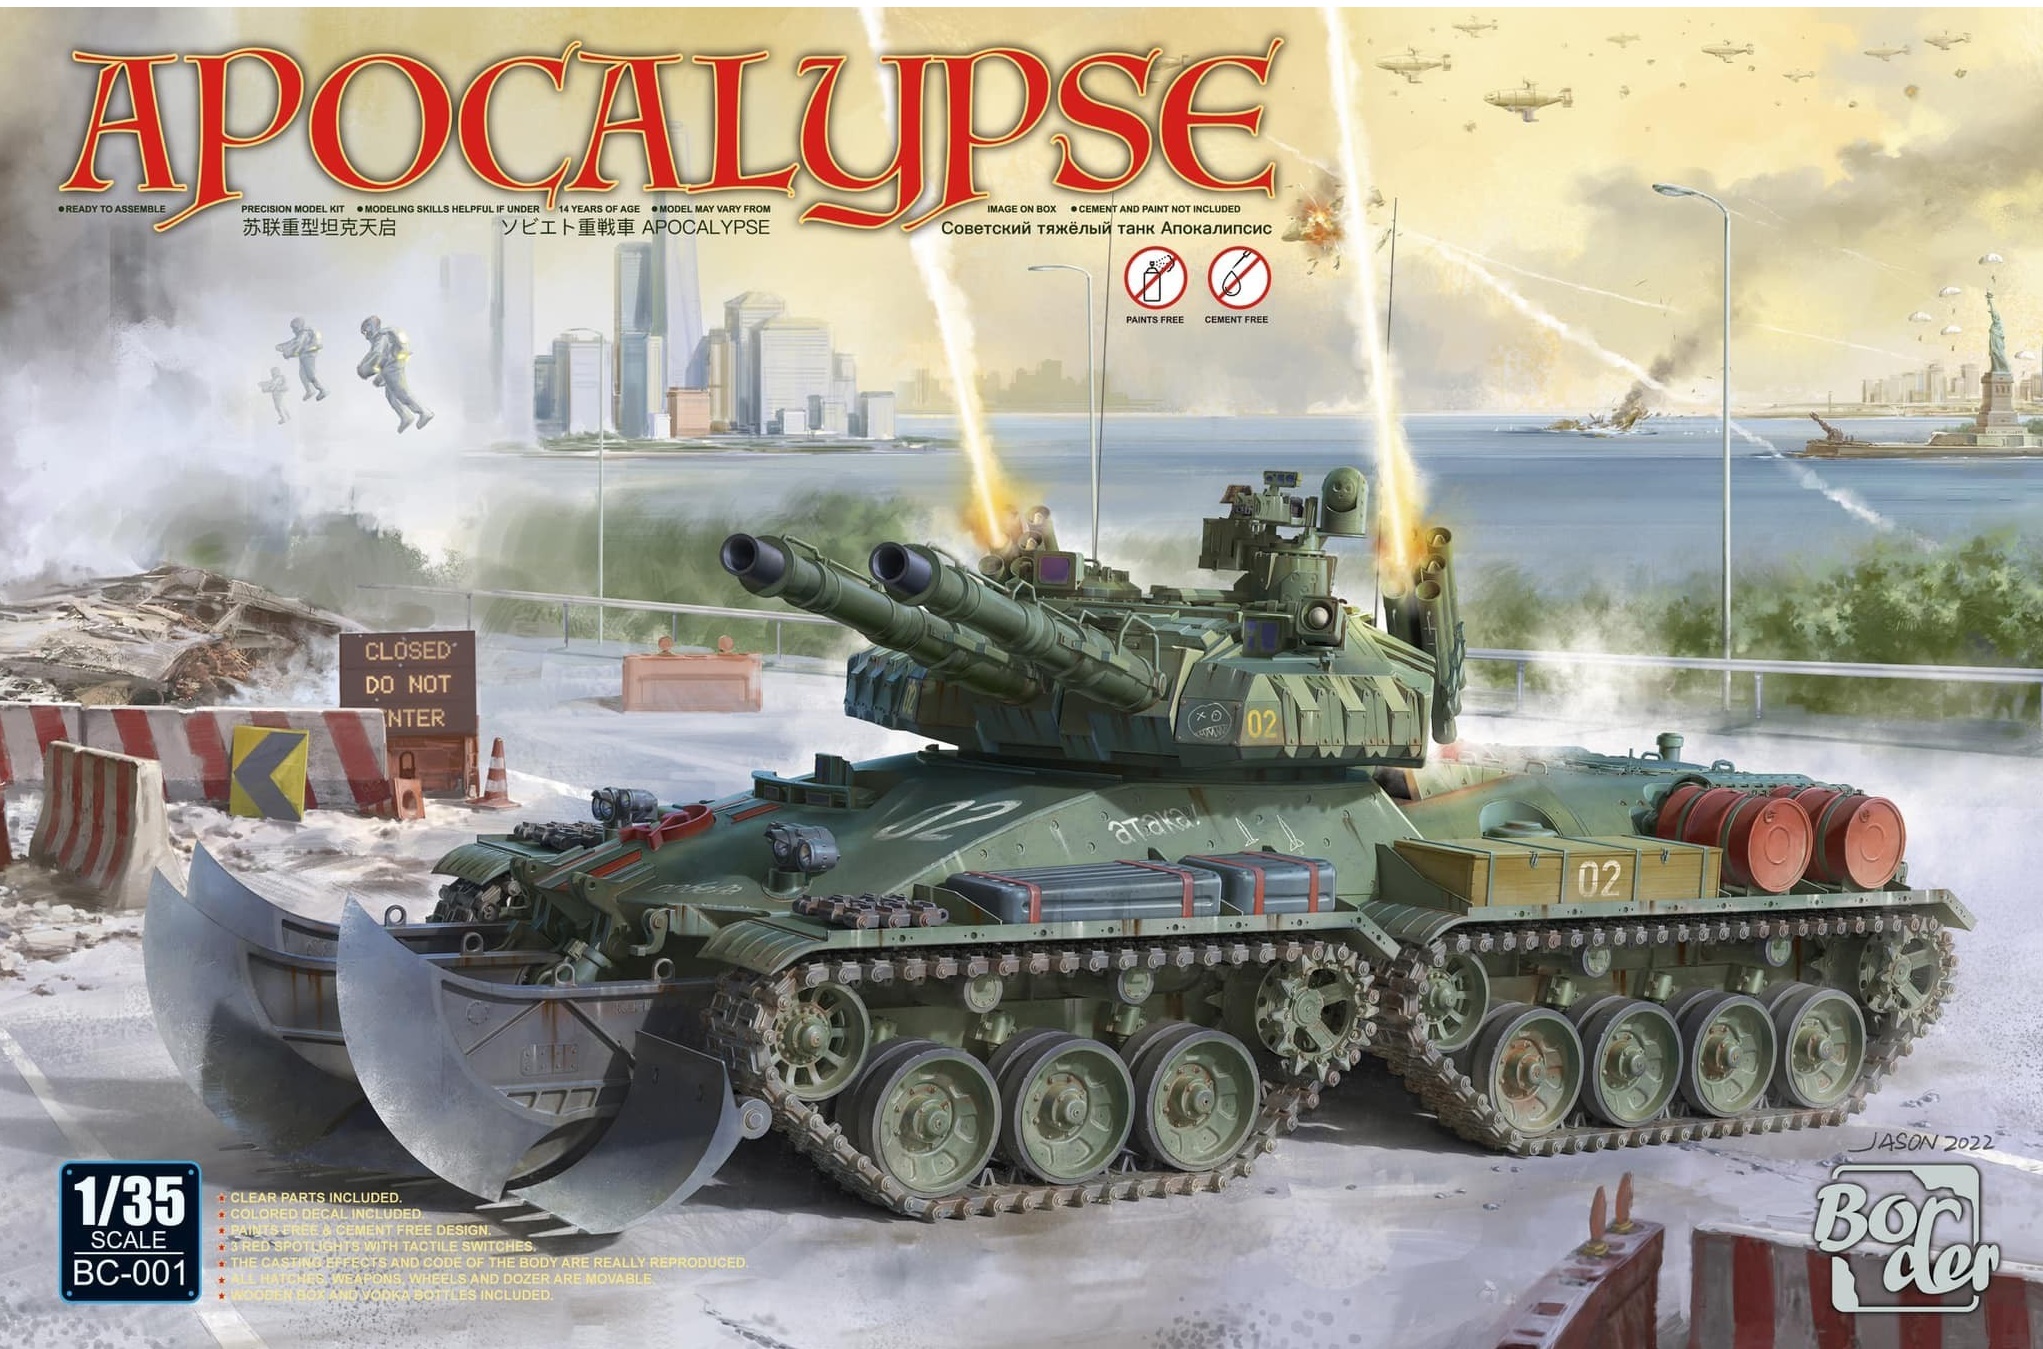 BC-001  техника и вооружение  Apocalypse  (1:35)